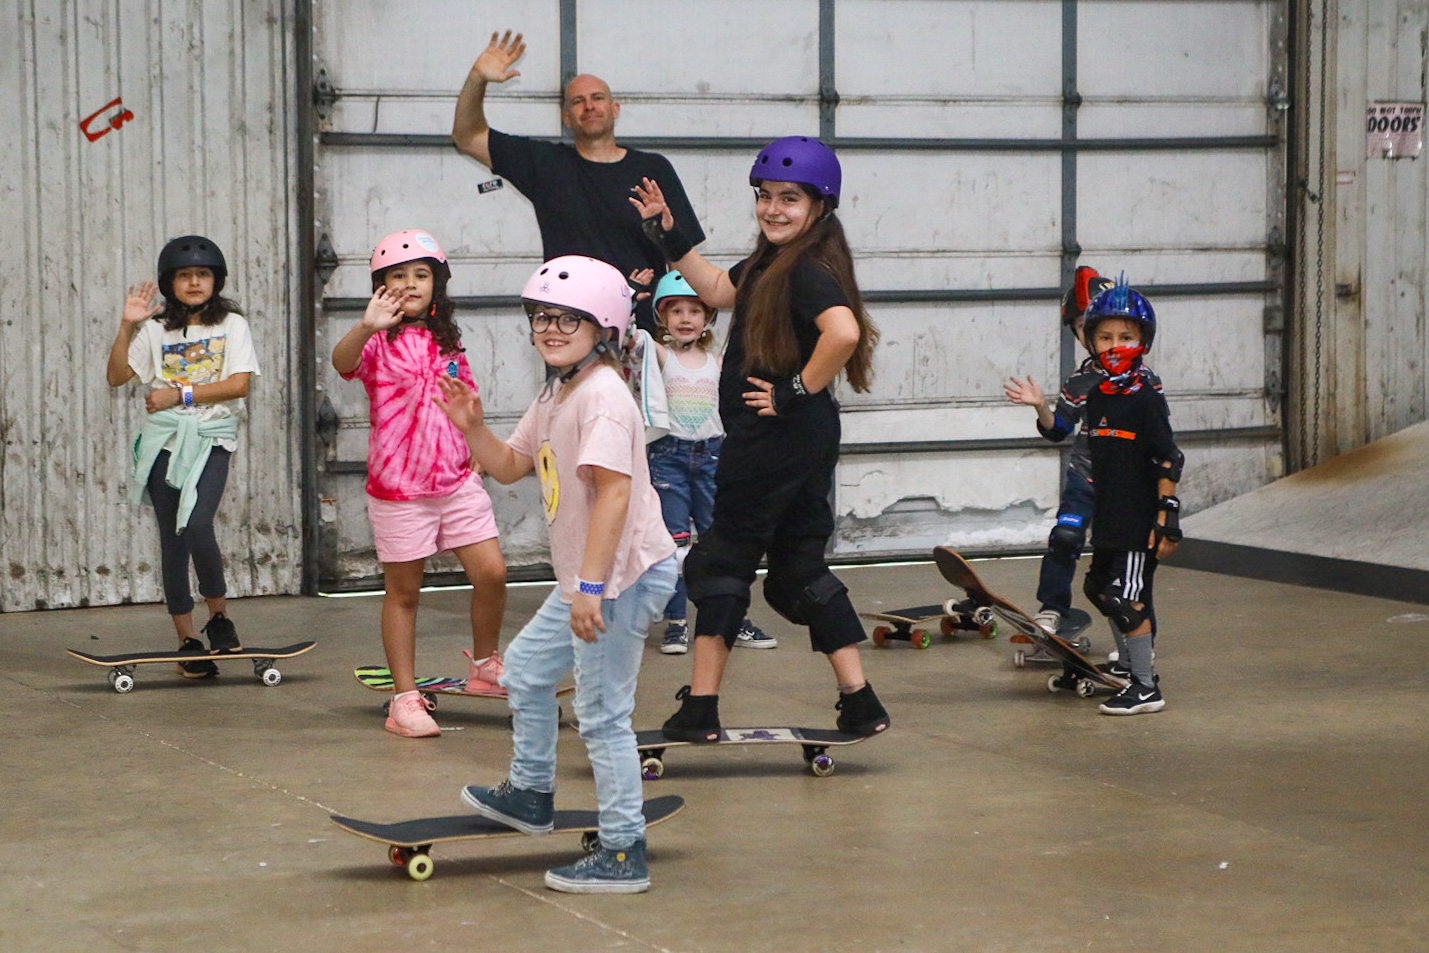 Skateboarding Summer Instructional Day Camps at Southside Skatepark Dates Announced!